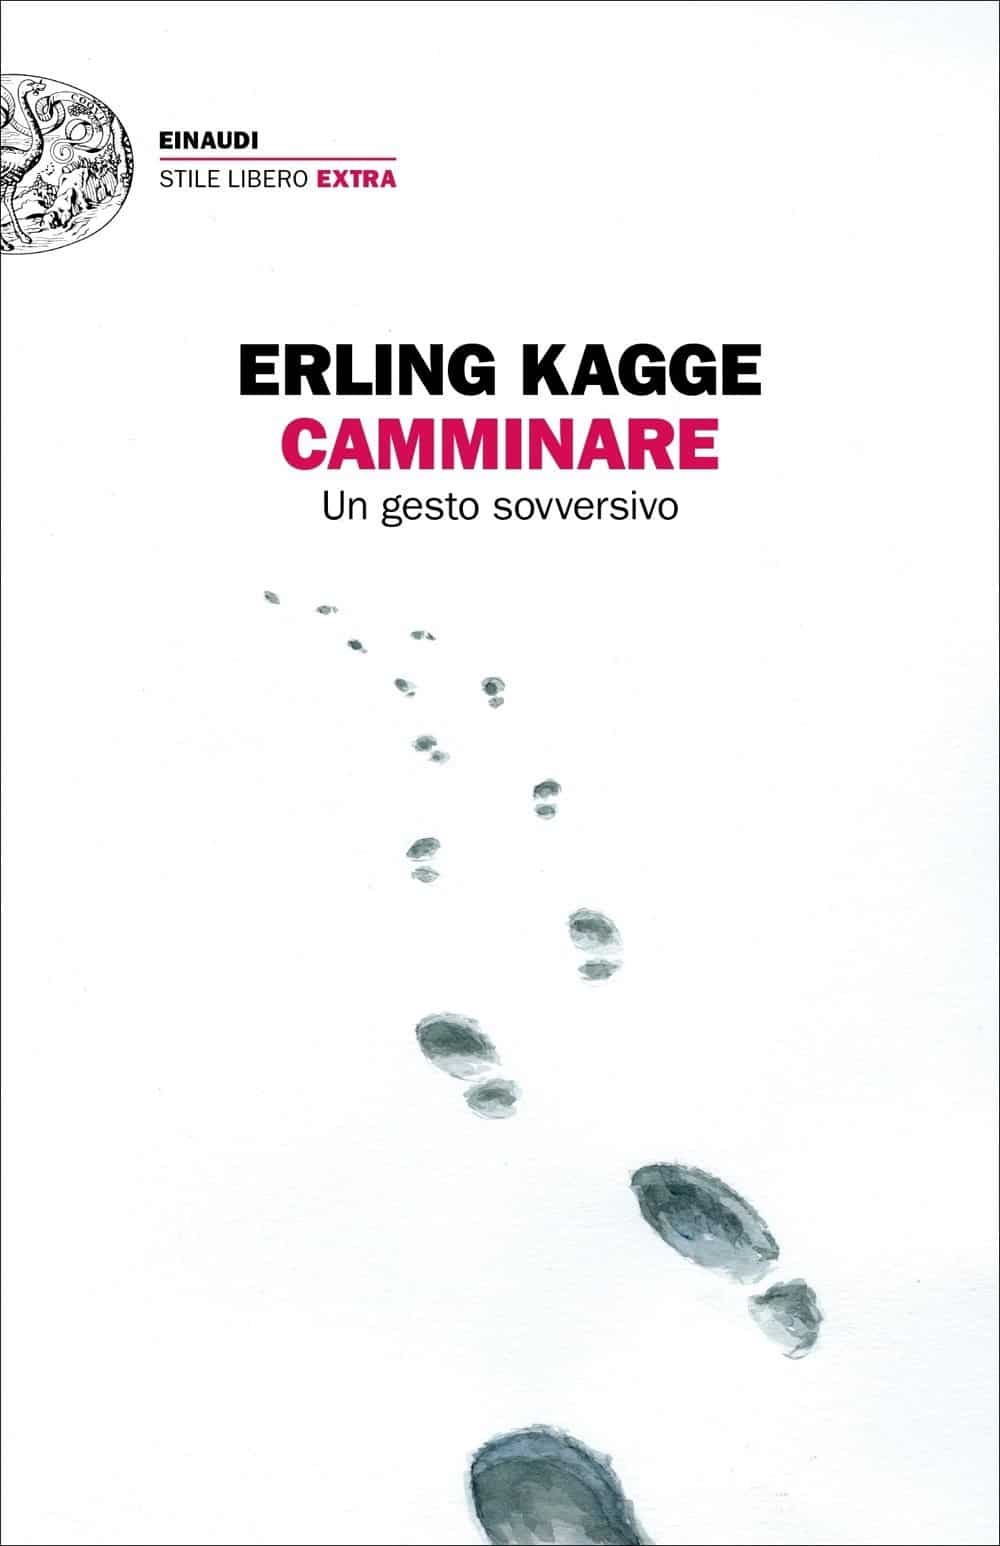 Camminare. Un gesto sovversivo - Erling Kagge (Einaudi)